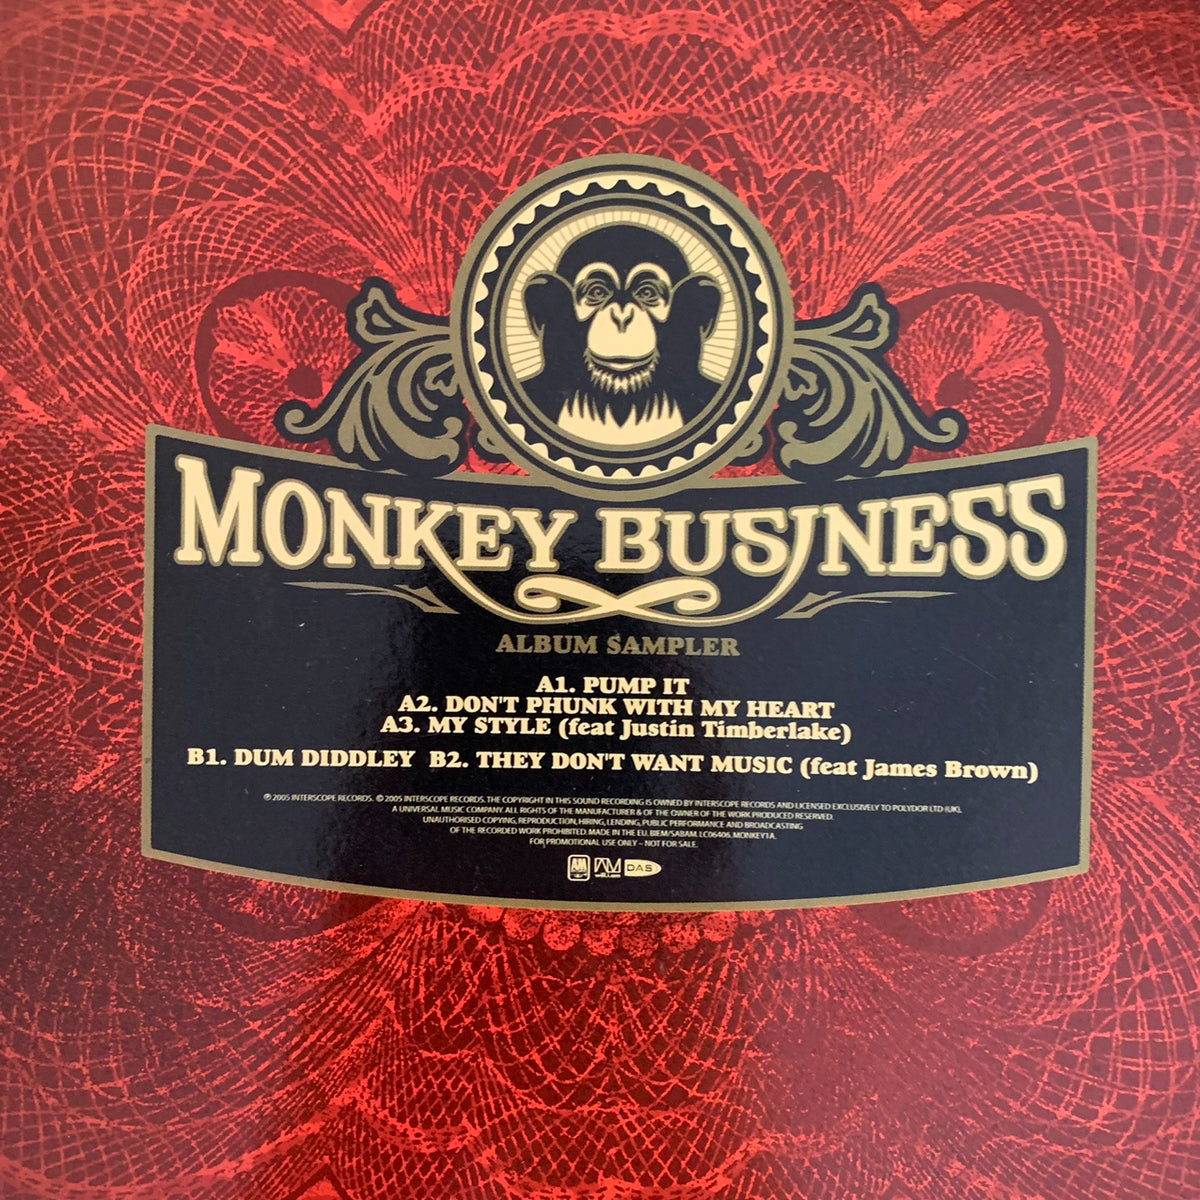 The Black Eyed Peas “Monkey Business” 12inch Vinyl Album